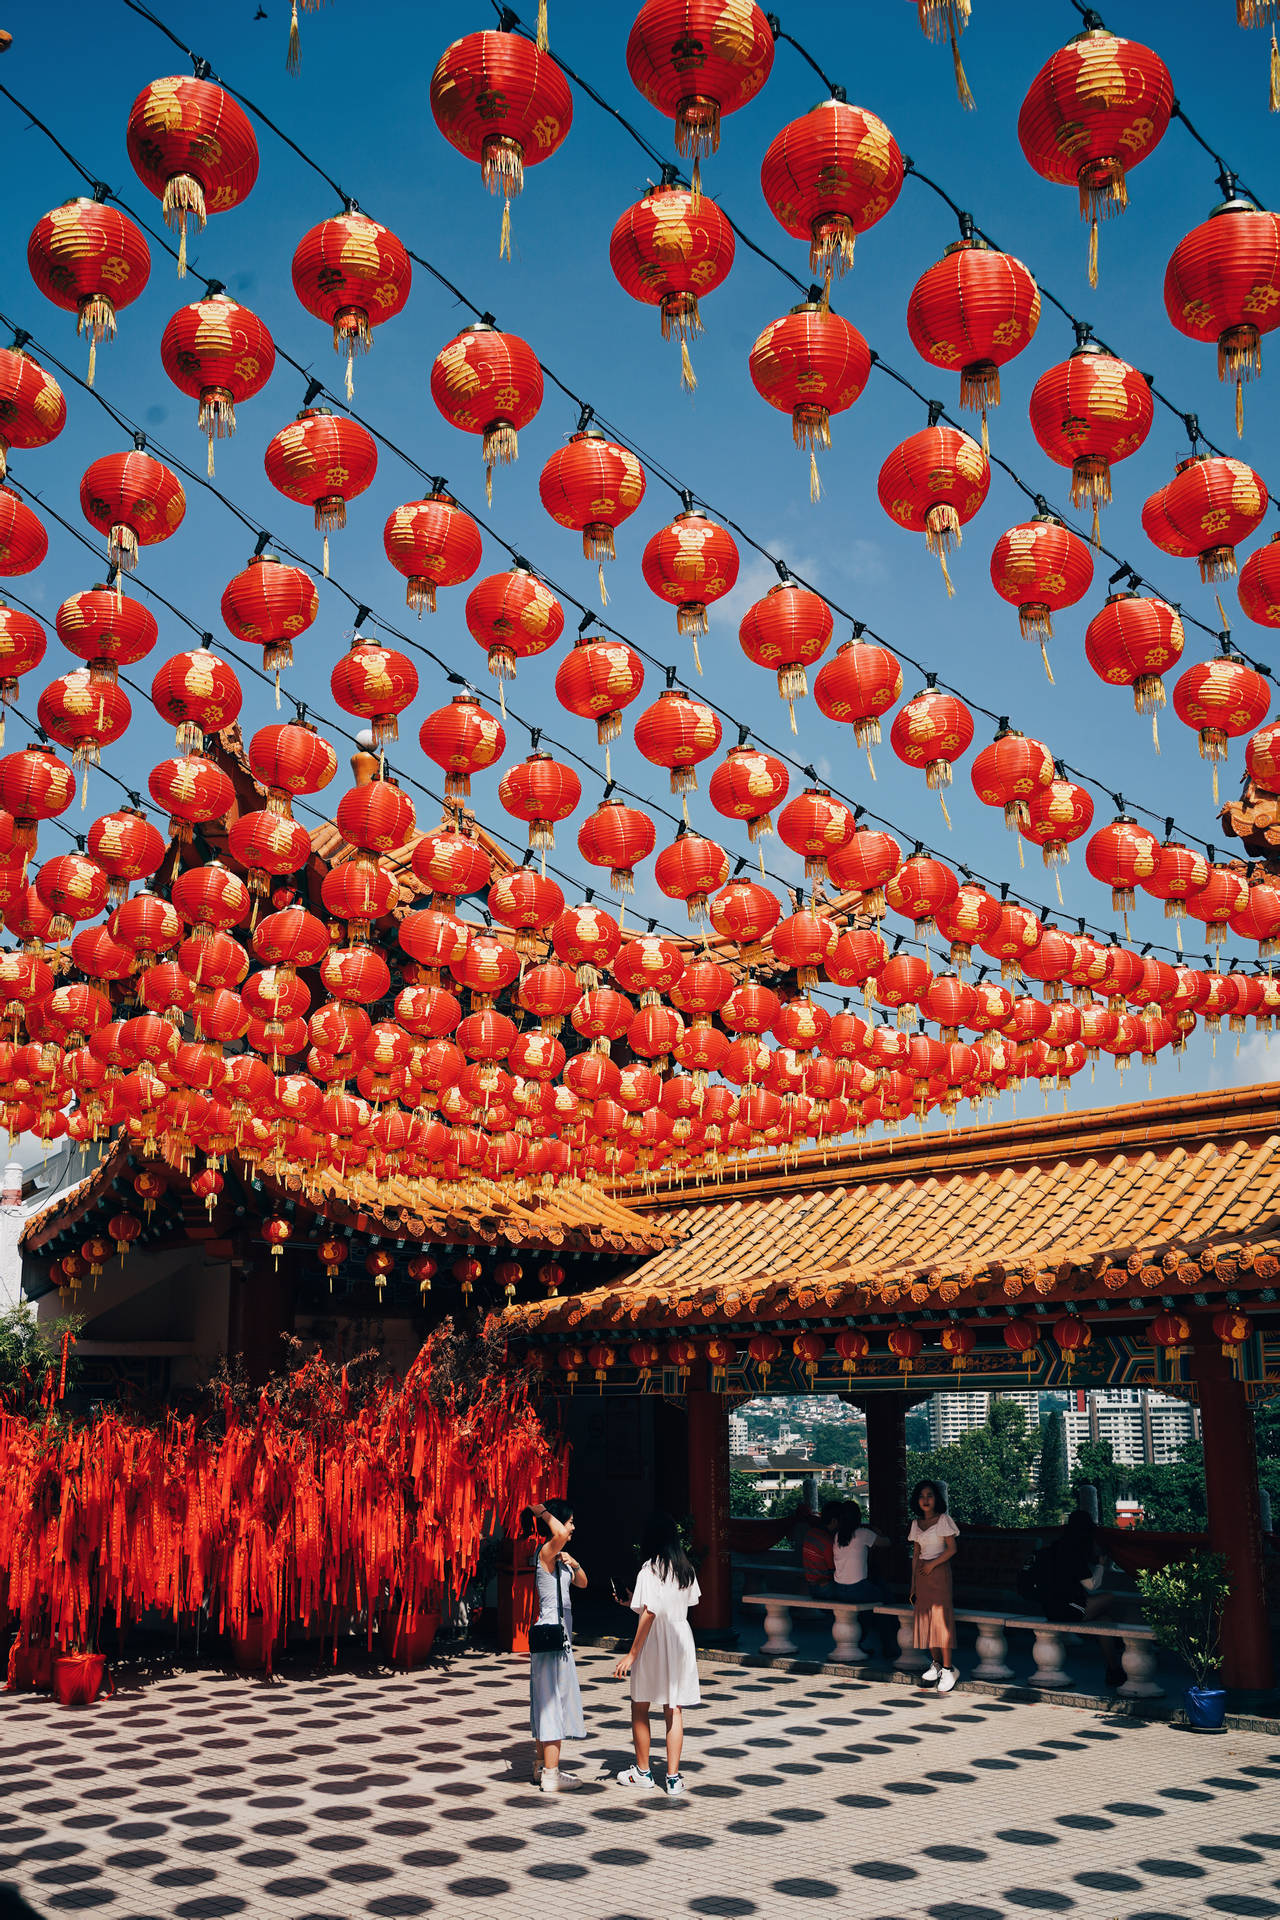 Caption: Spirited Celebration Of Chinese New Year Wallpaper